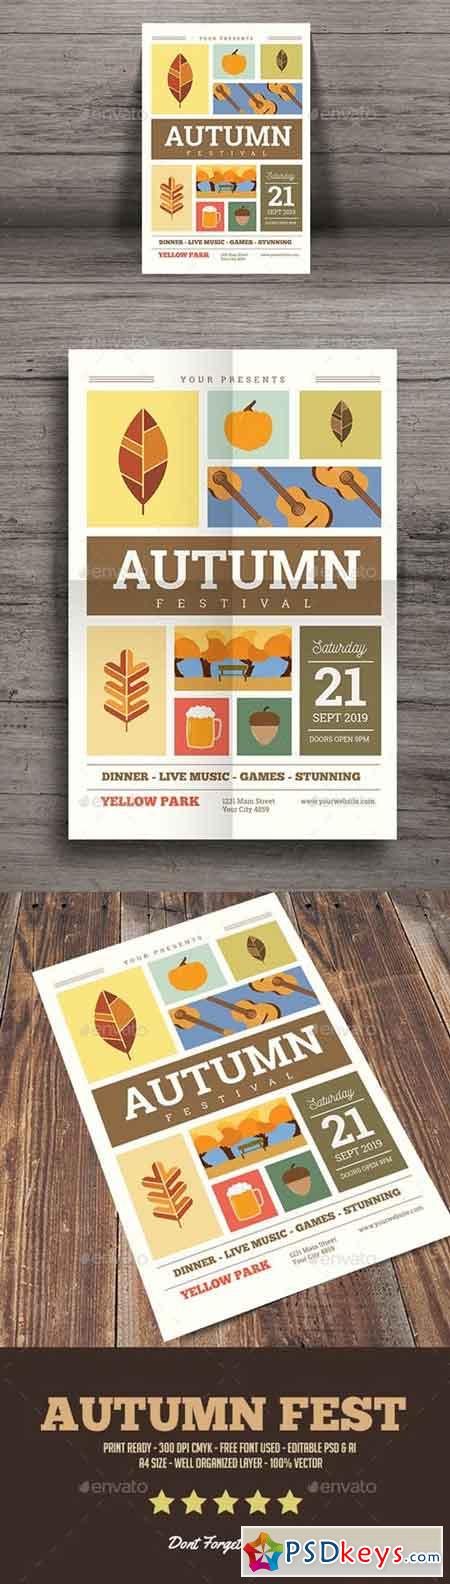 Autumn Festival Flyer 17810780